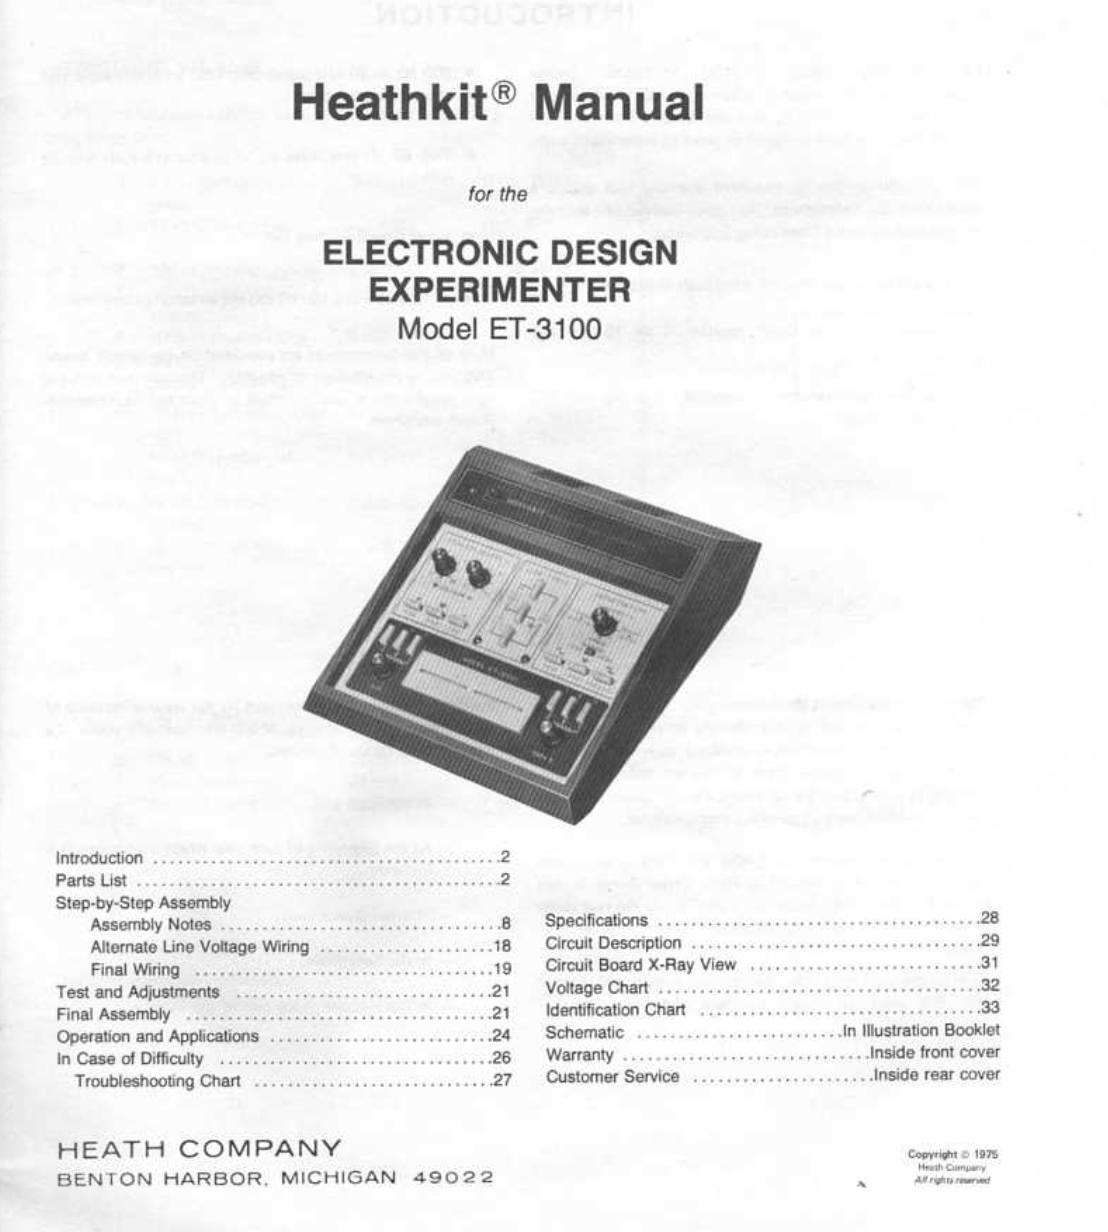 Heathkit ET-3100 Electronic Design Experimenter - Instruction Manual